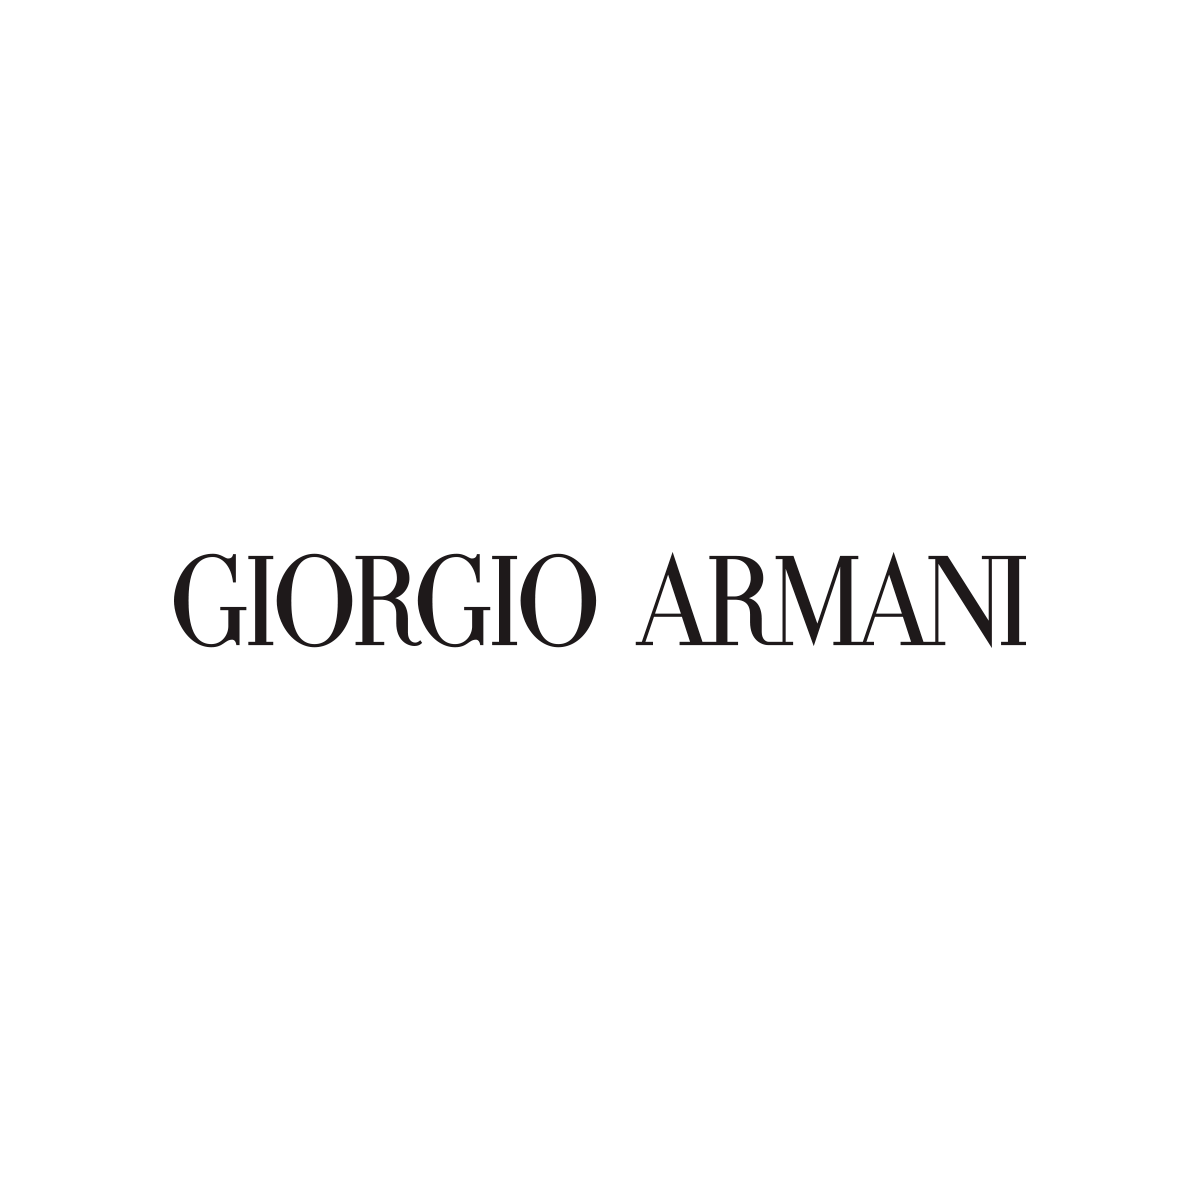 Giorgio Armani in Frankfurt am Main - Logo